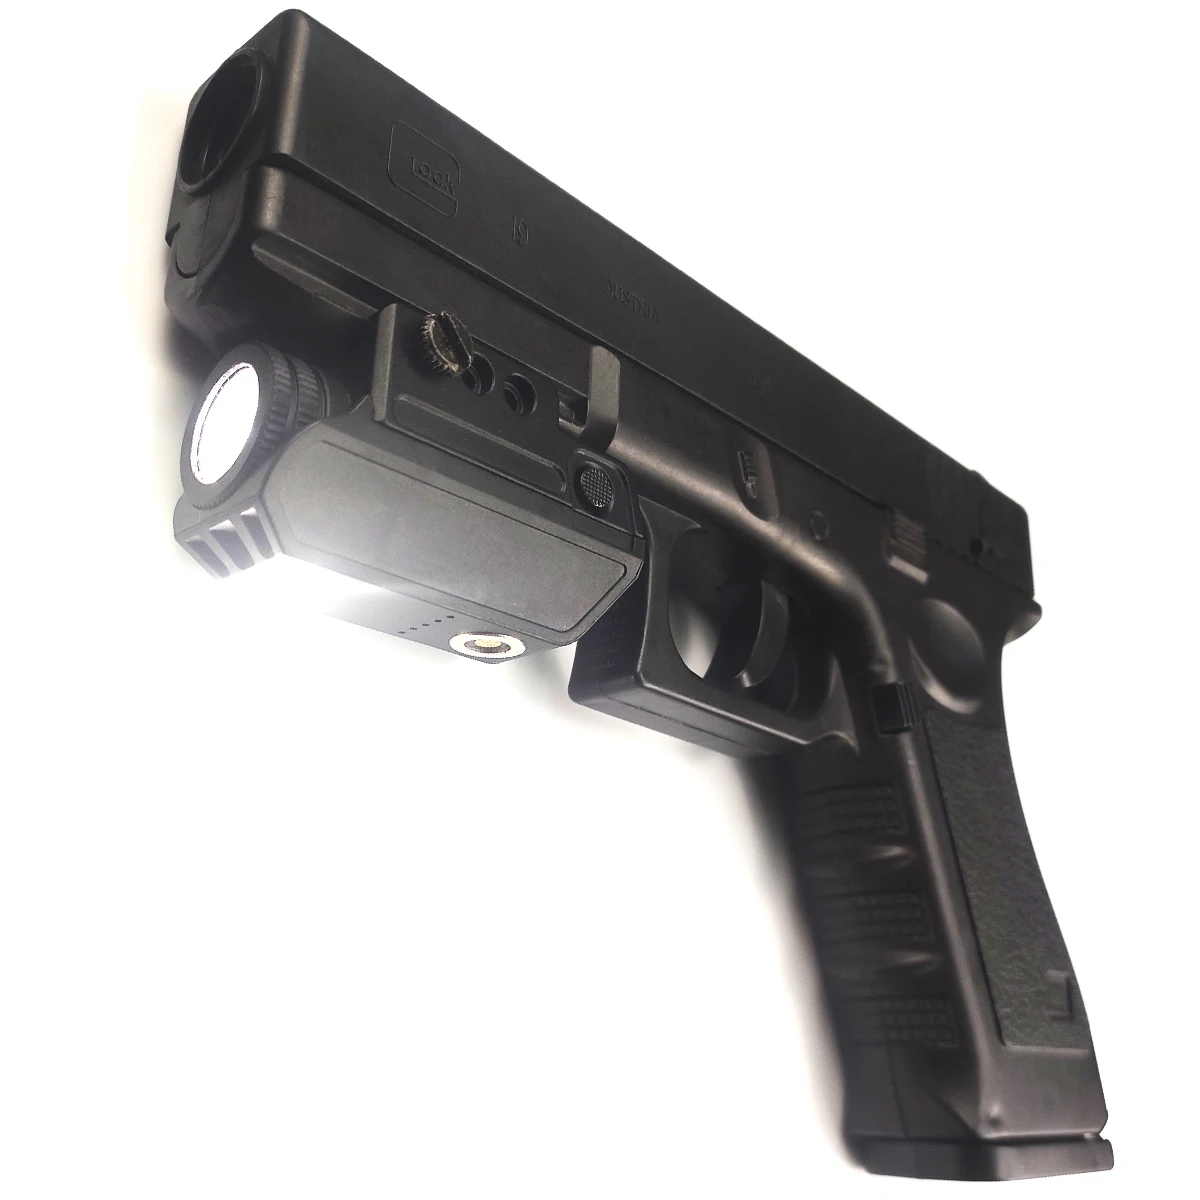 

New Gun Light 500 Lumens Tactical Gun Light for Picatinny Rail Hunting Weapon Light Pistol Rifle, Black